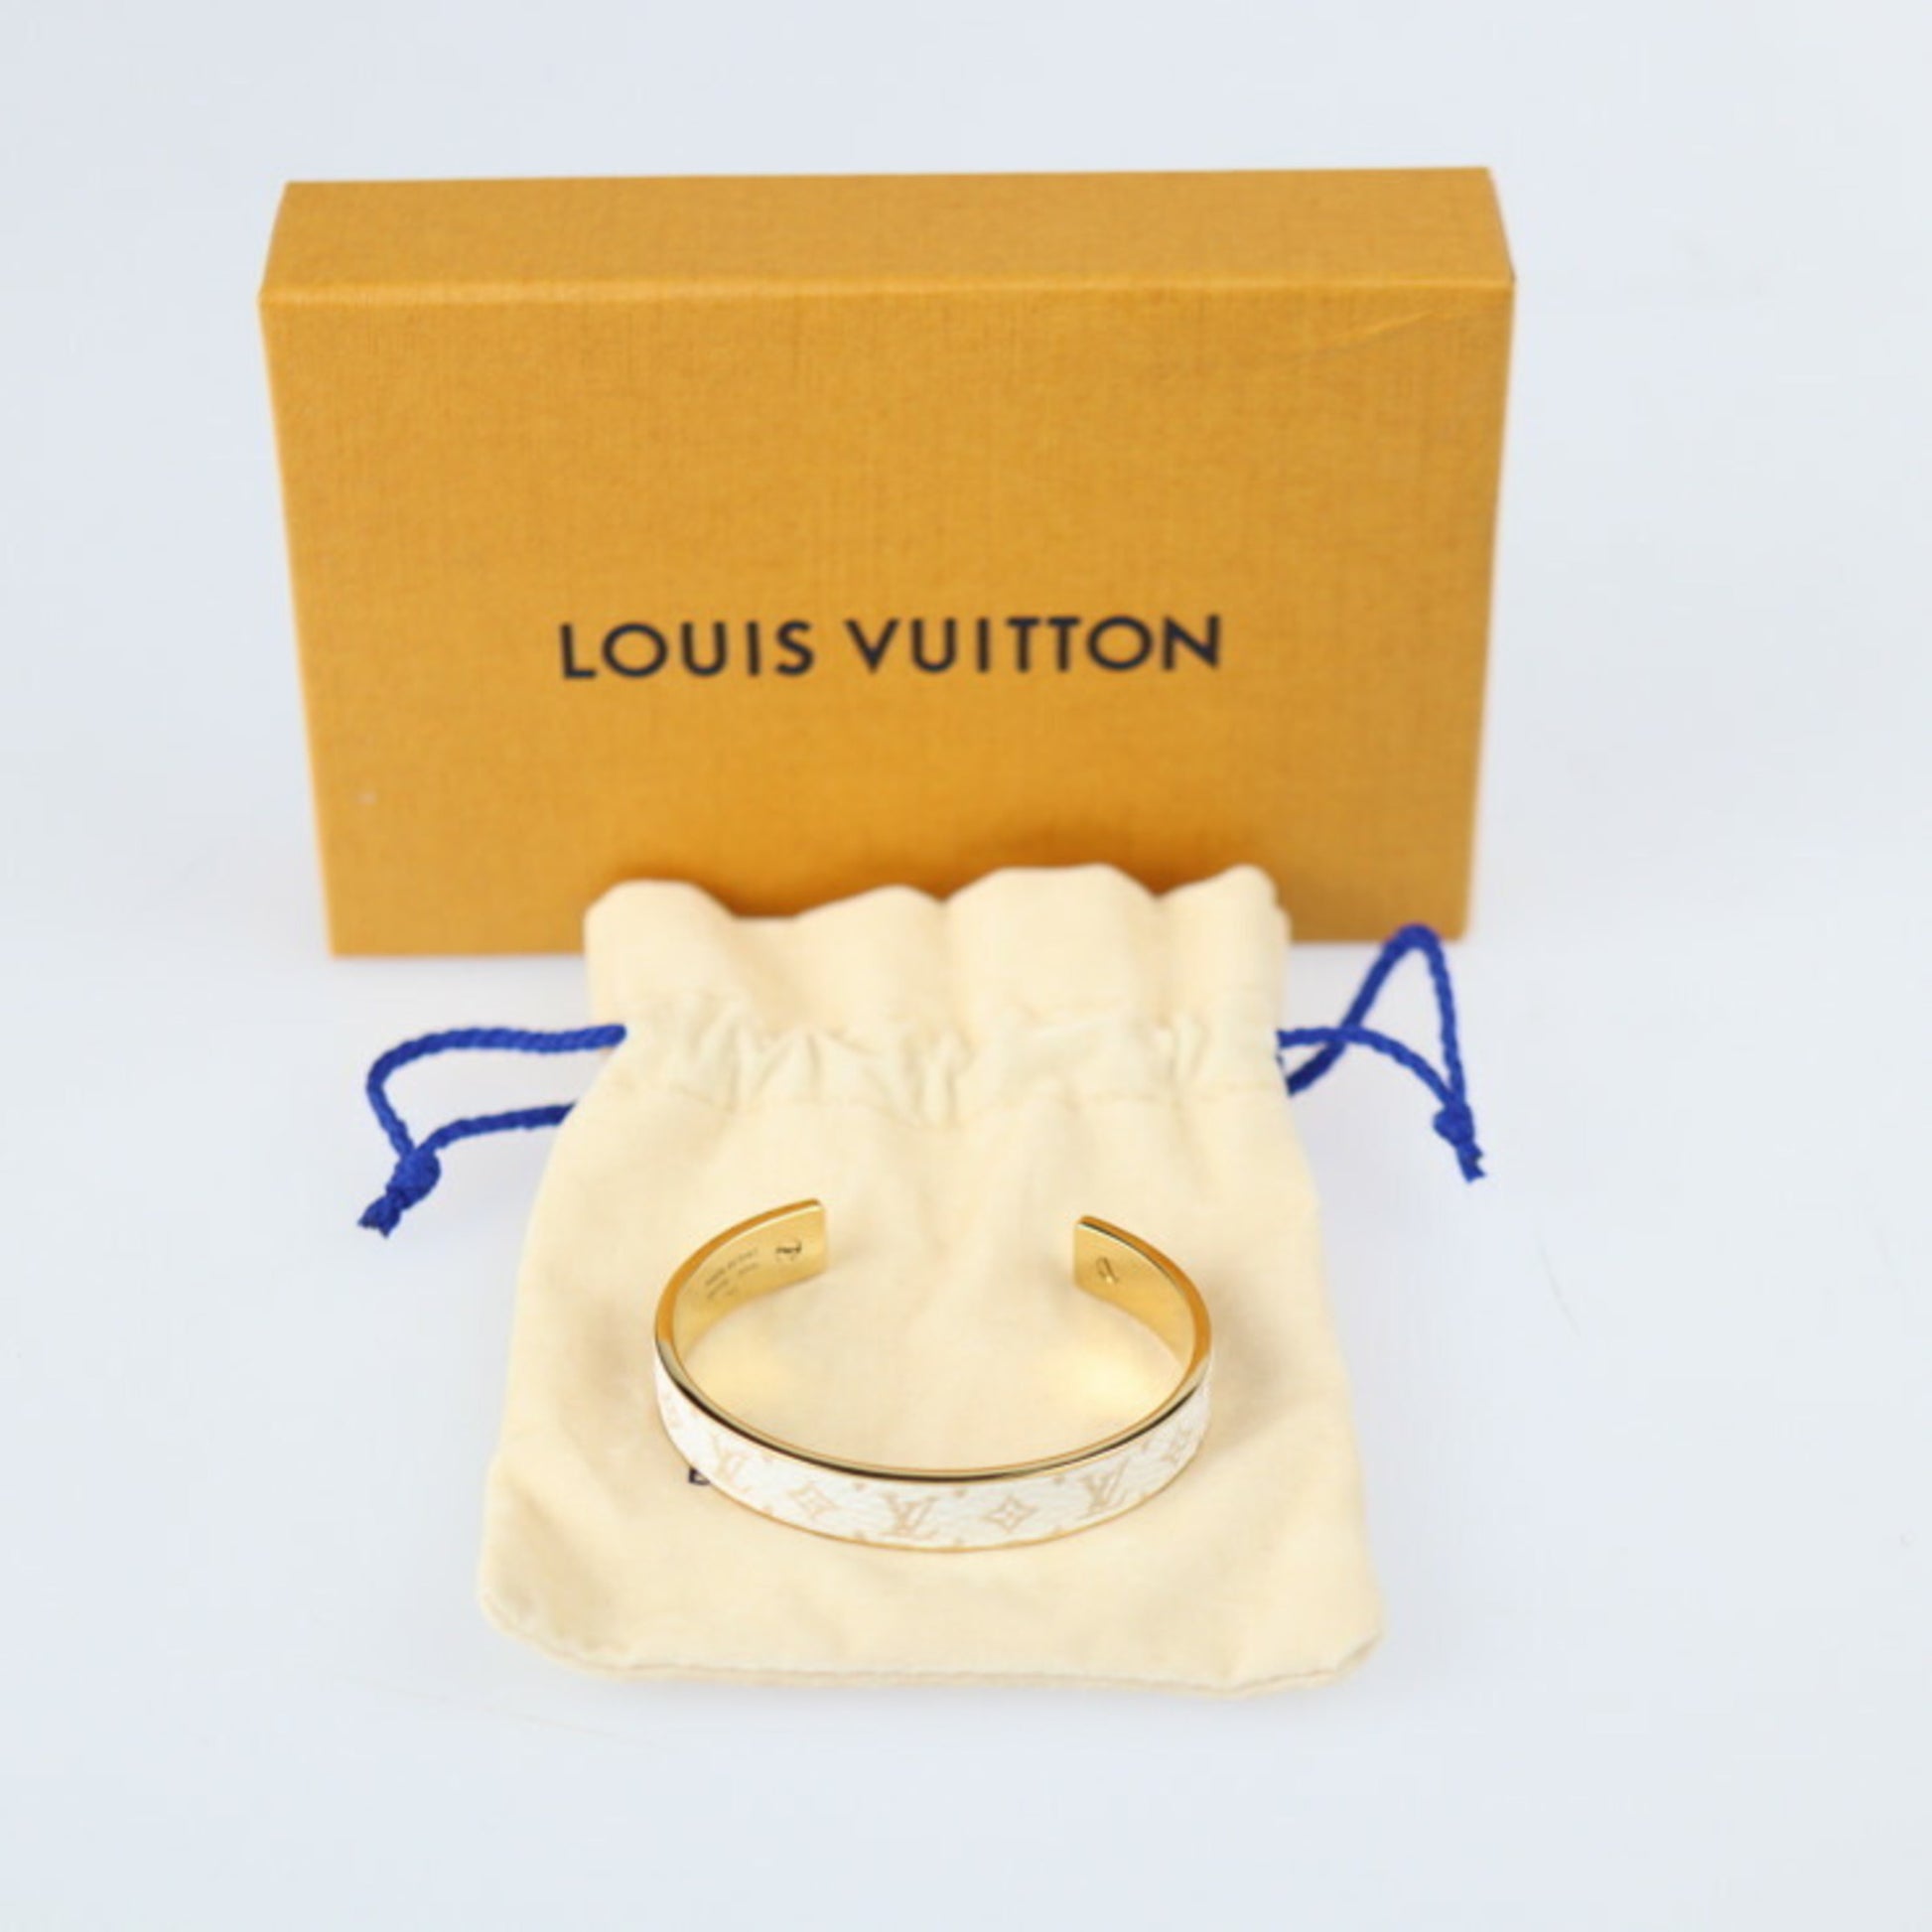 Authenticated Used LOUIS VUITTON Louis Vuitton Jonk Wilde LV Monogram Bracelet  Bangle M67783 Notation Size S Metal Gold White Series C Cuff 